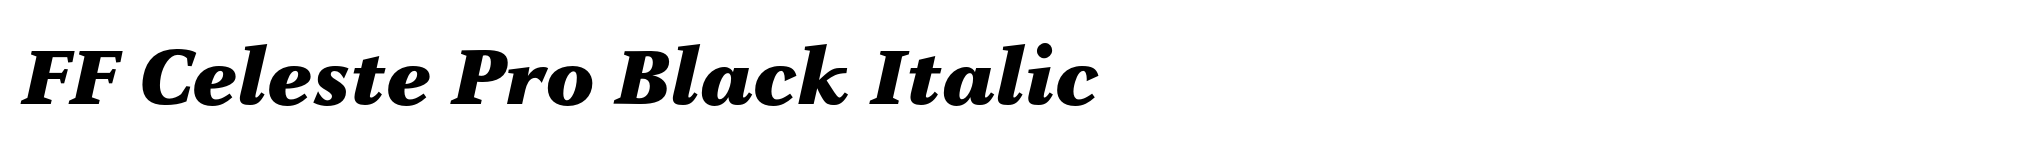 FF Celeste Pro Black Italic image